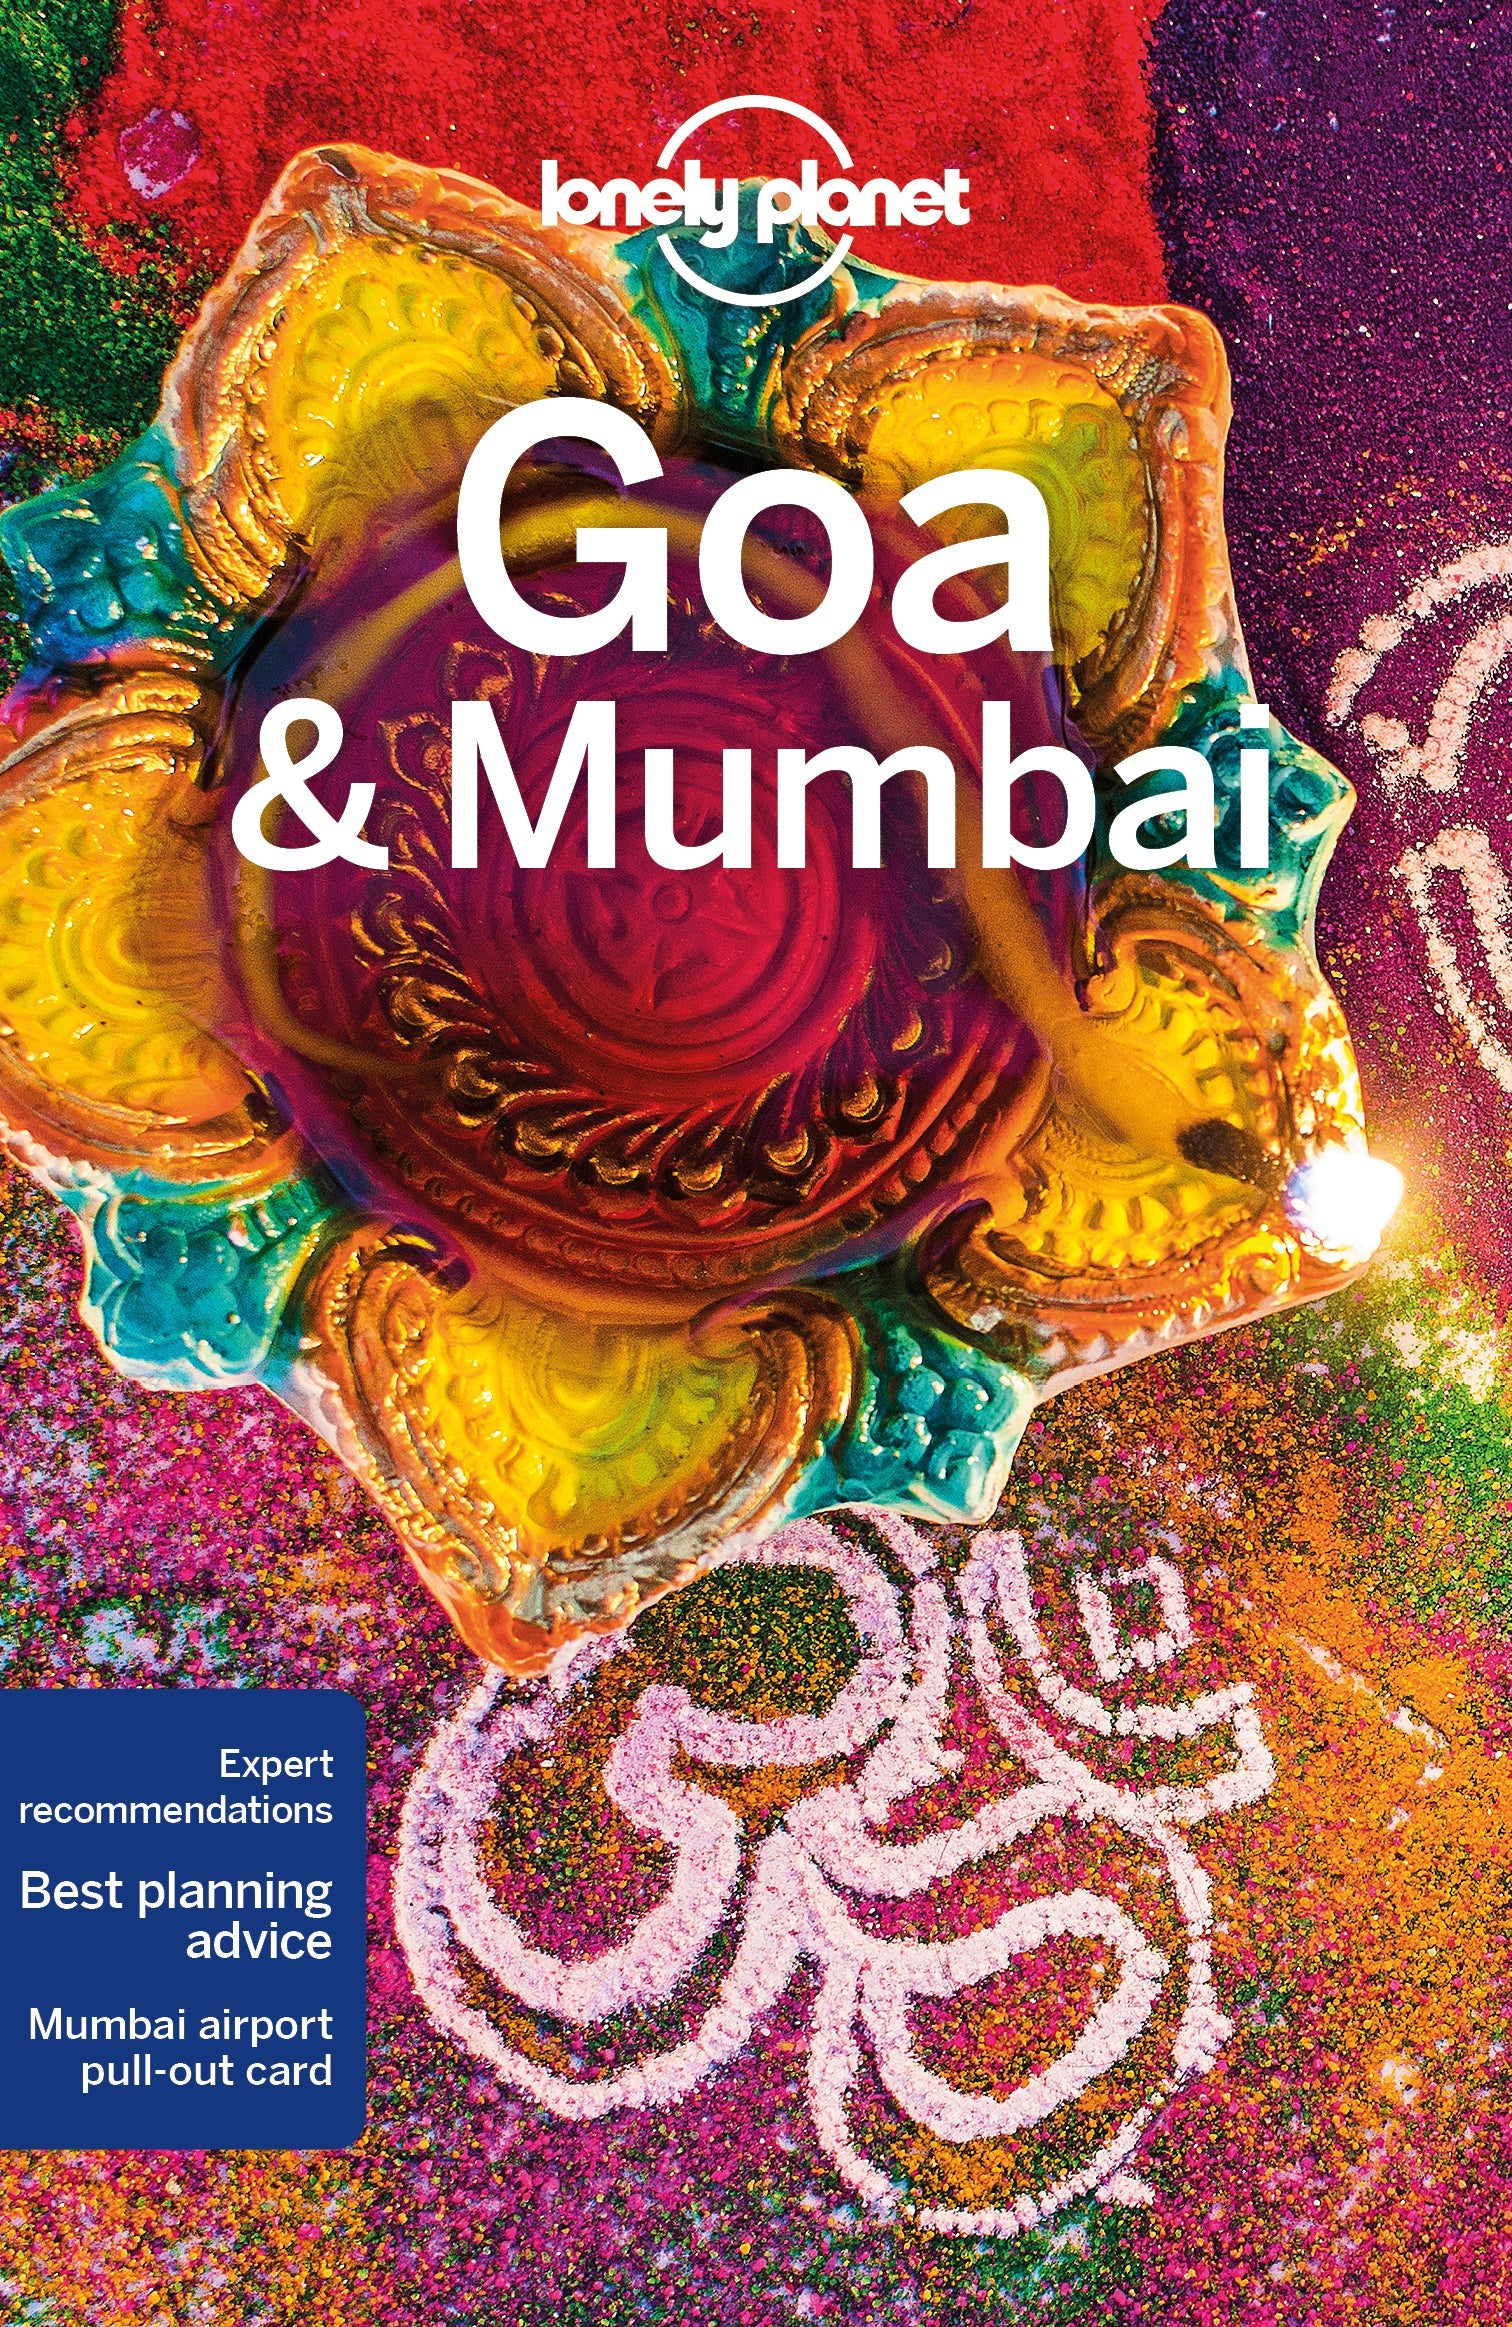 Goa & Mumbai travel guide - Lonely Planet Online Shop